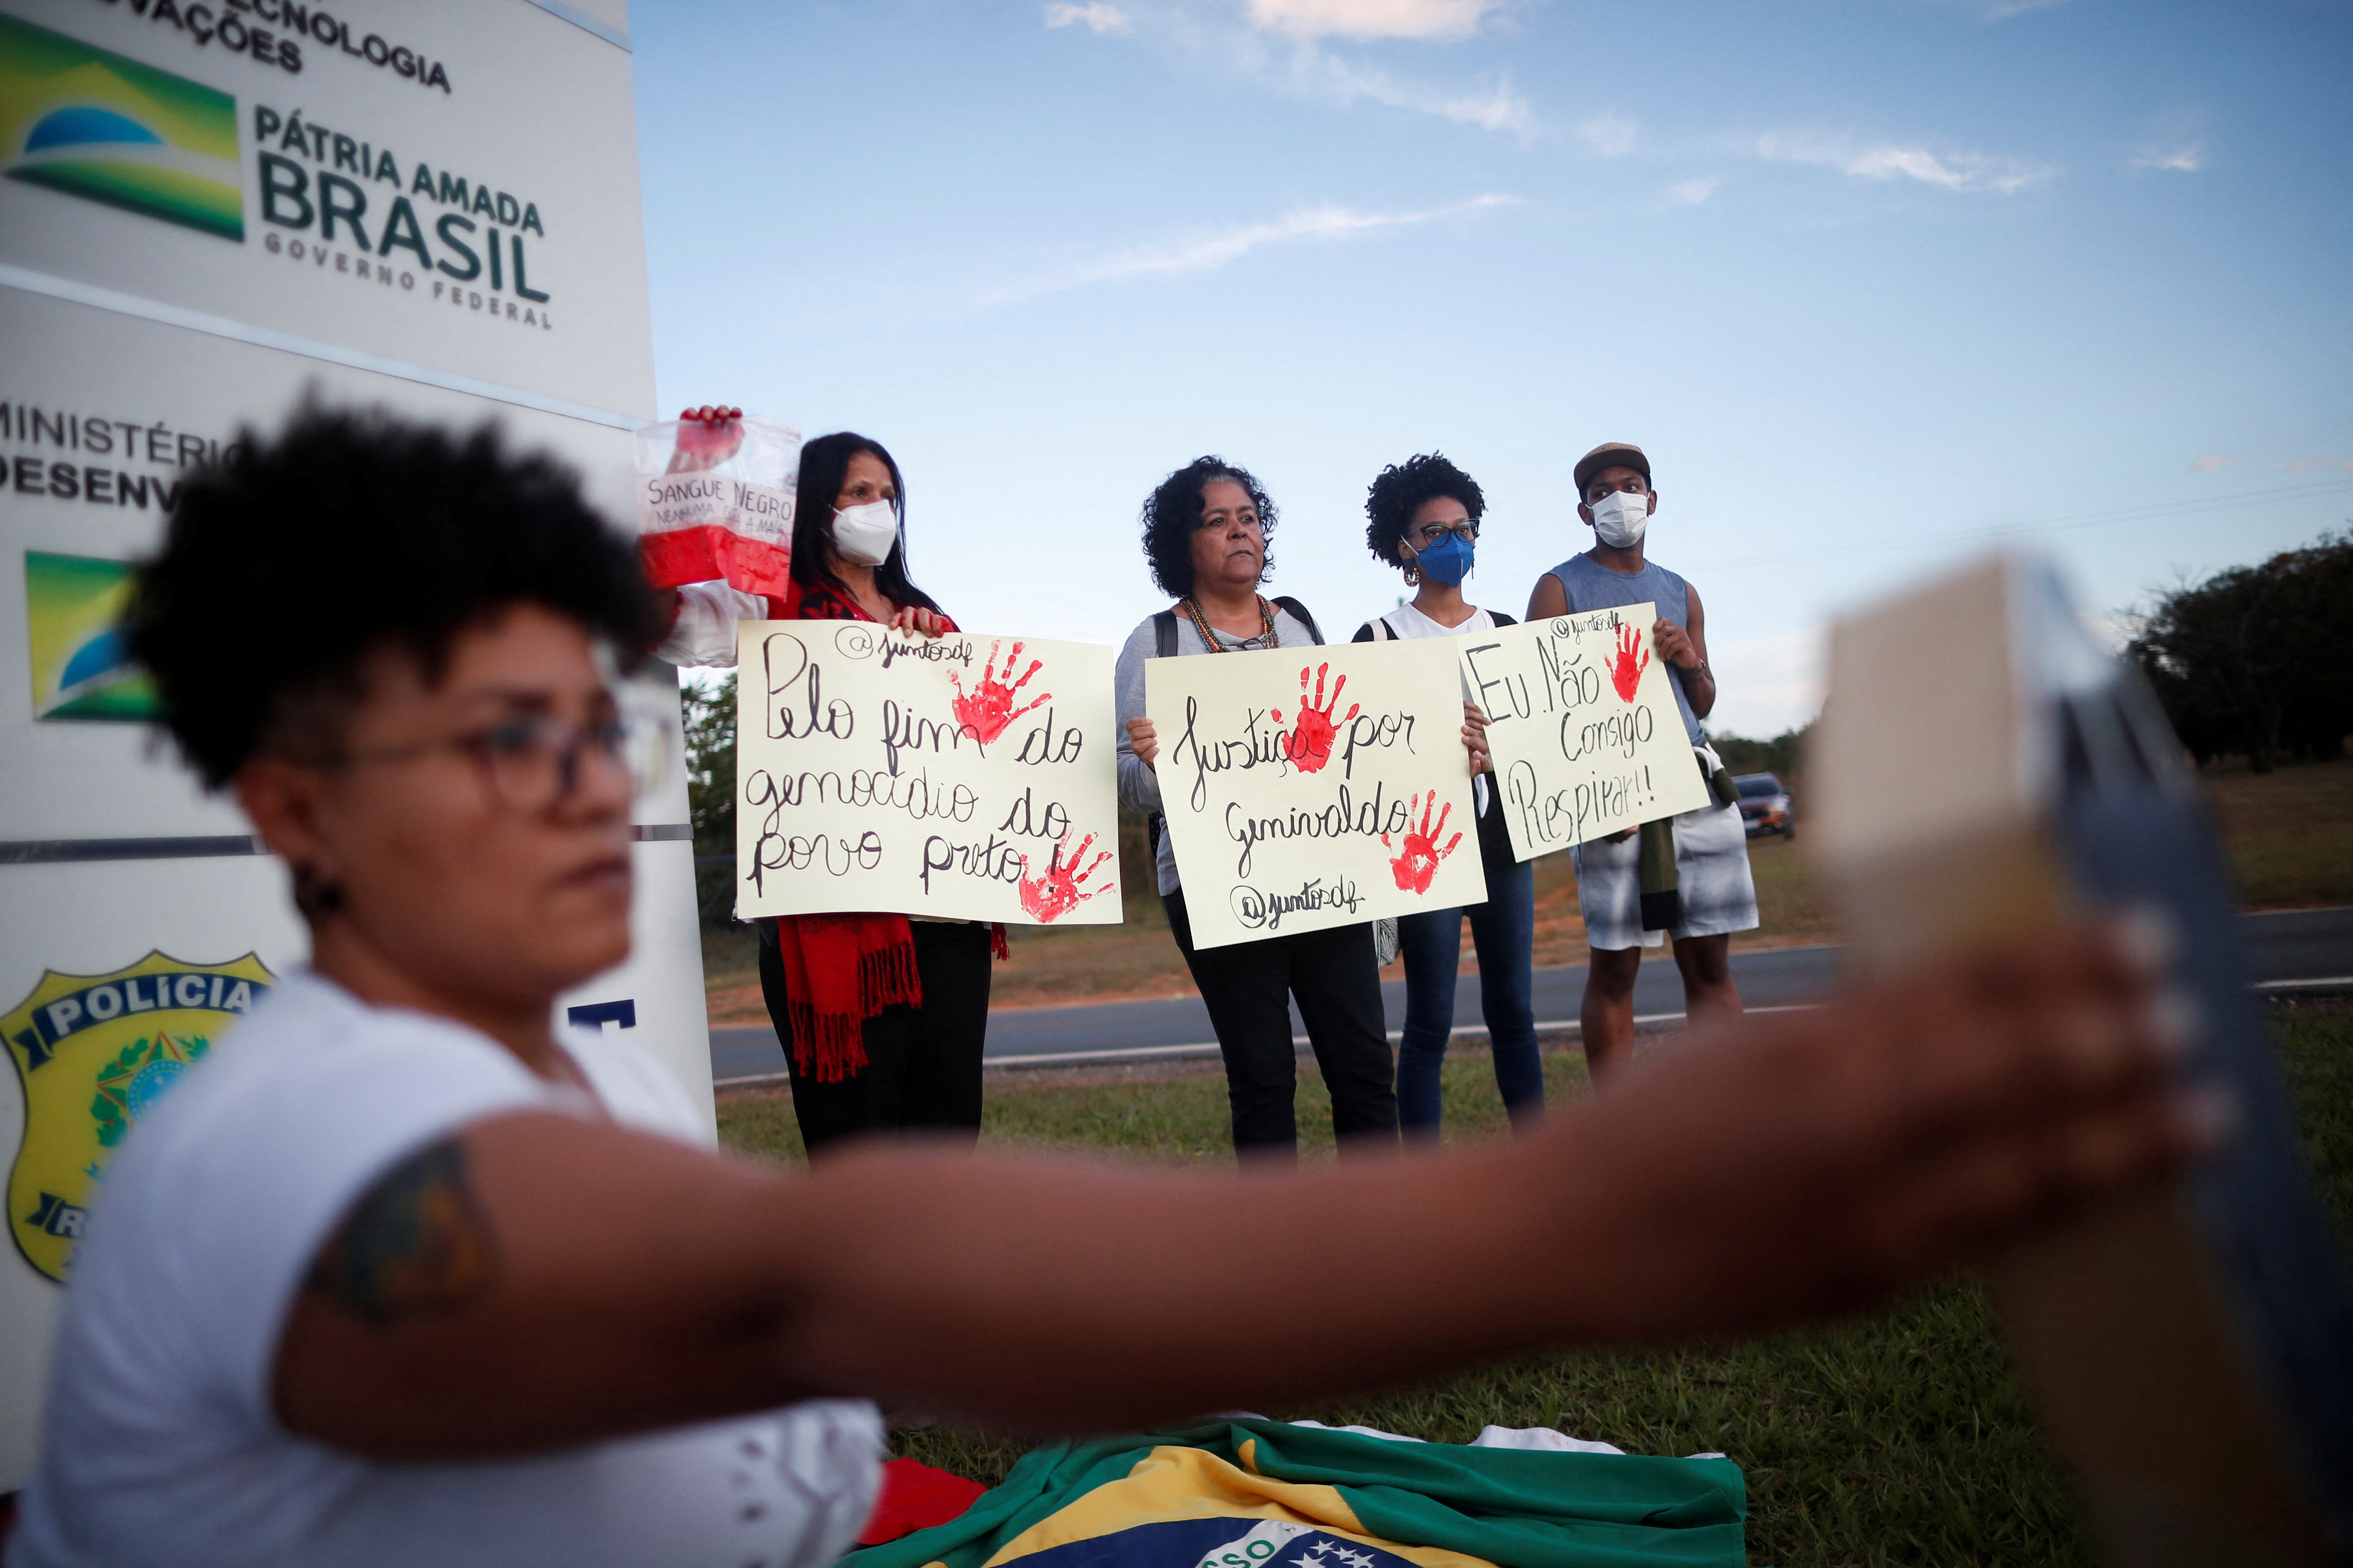 Activists of Black movement protest following the death of Genivaldo Santos, in Brasilia